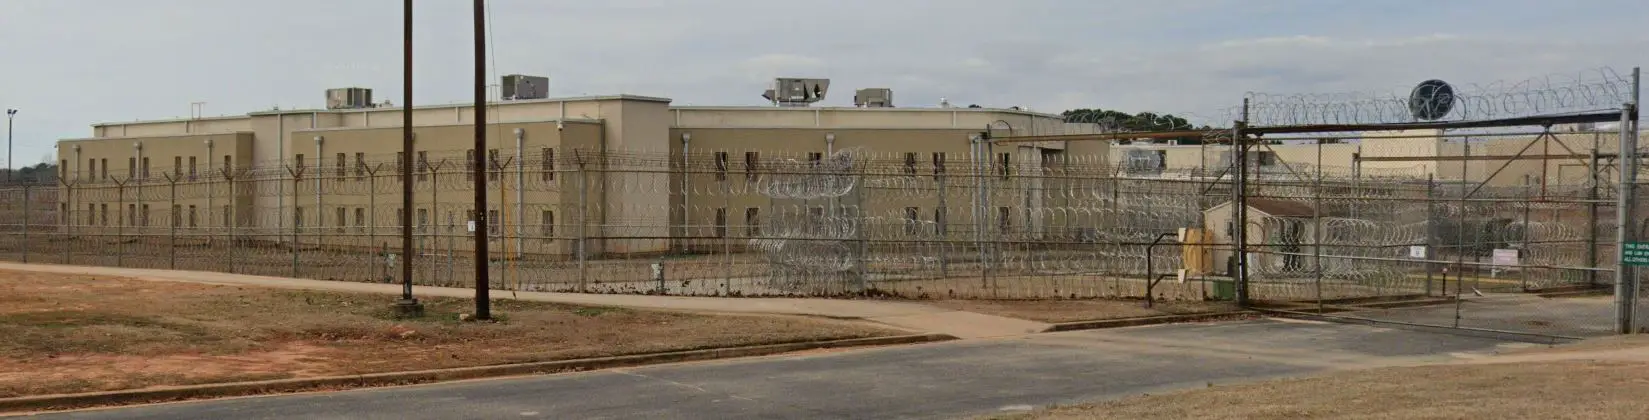 Photos Clayton County Prison 4